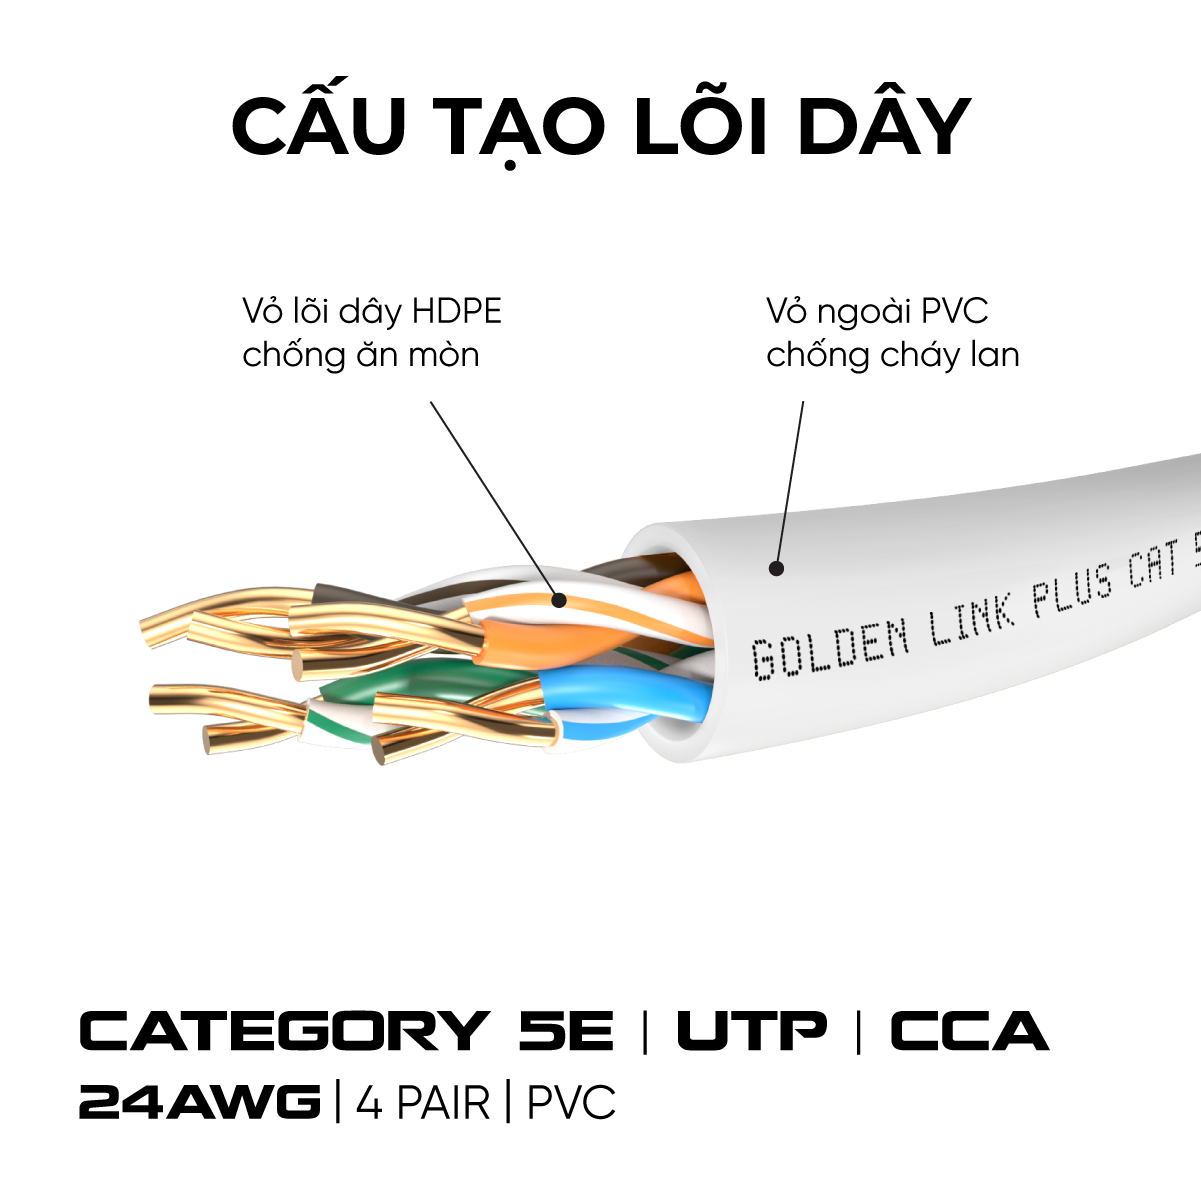 Cable LAN GOLDEN TAIWAN UTP CAT5E 305m Trắng (China)